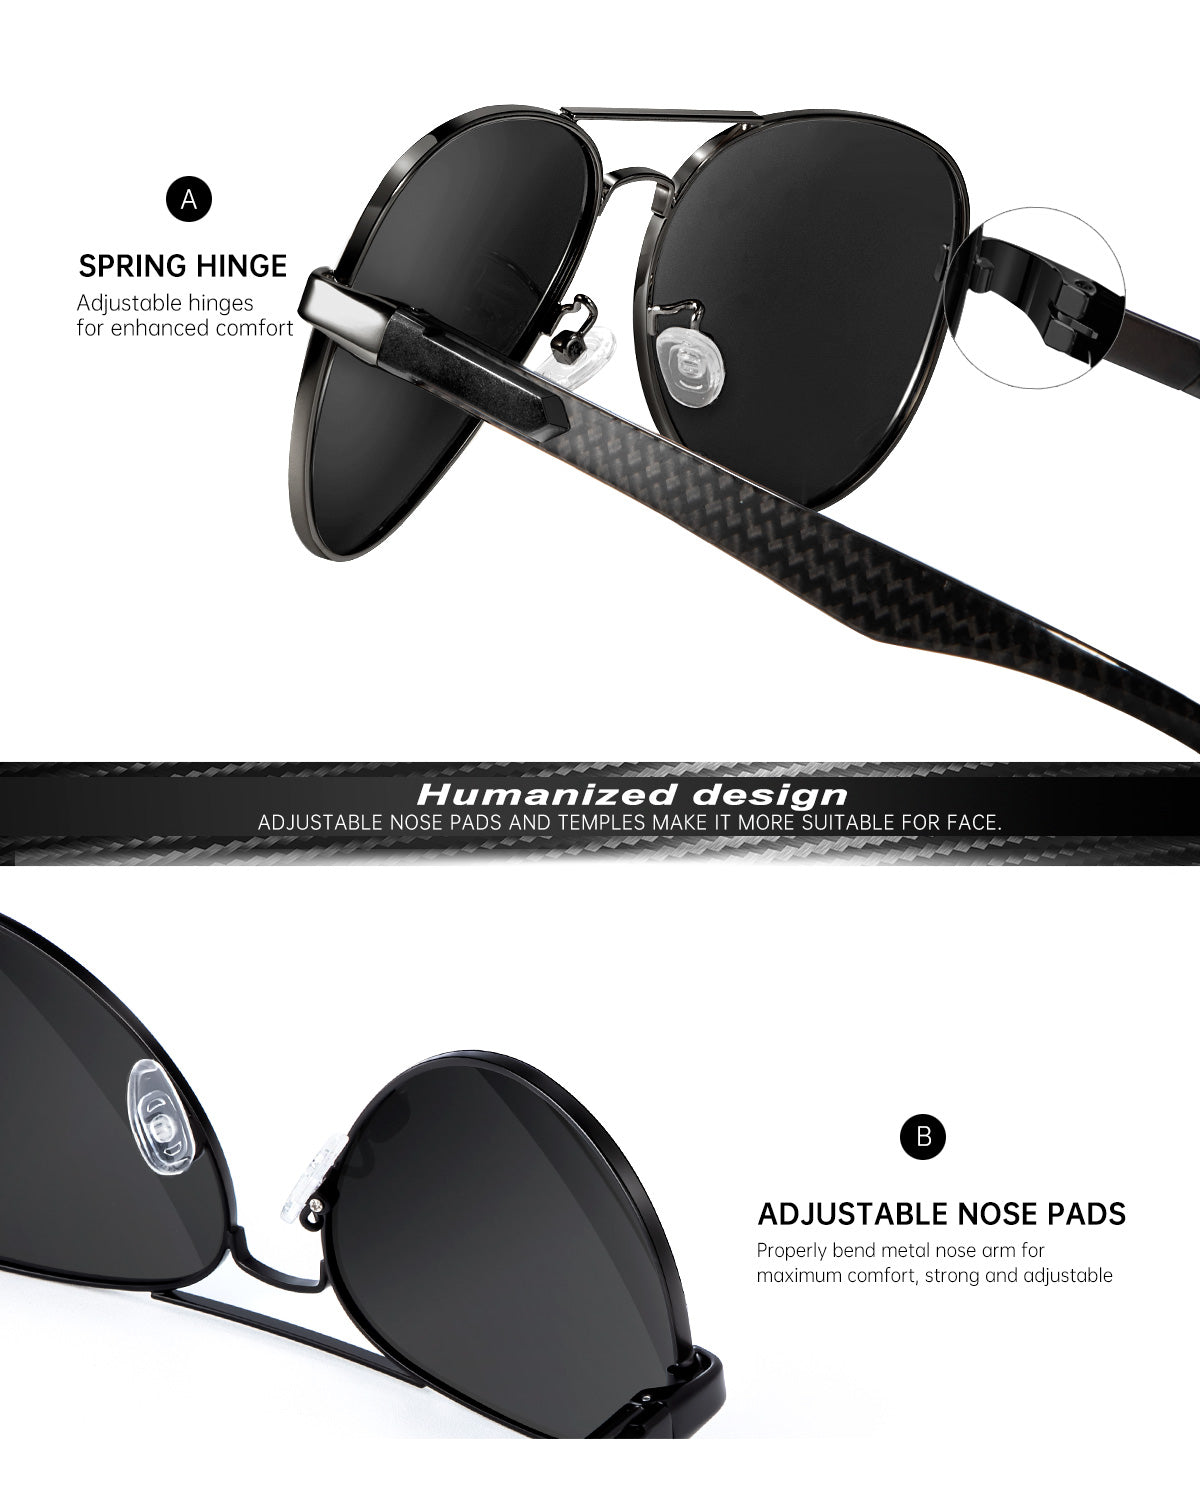 Carbon Fiber Temple Polarized Pilot Sunglasses S55-5